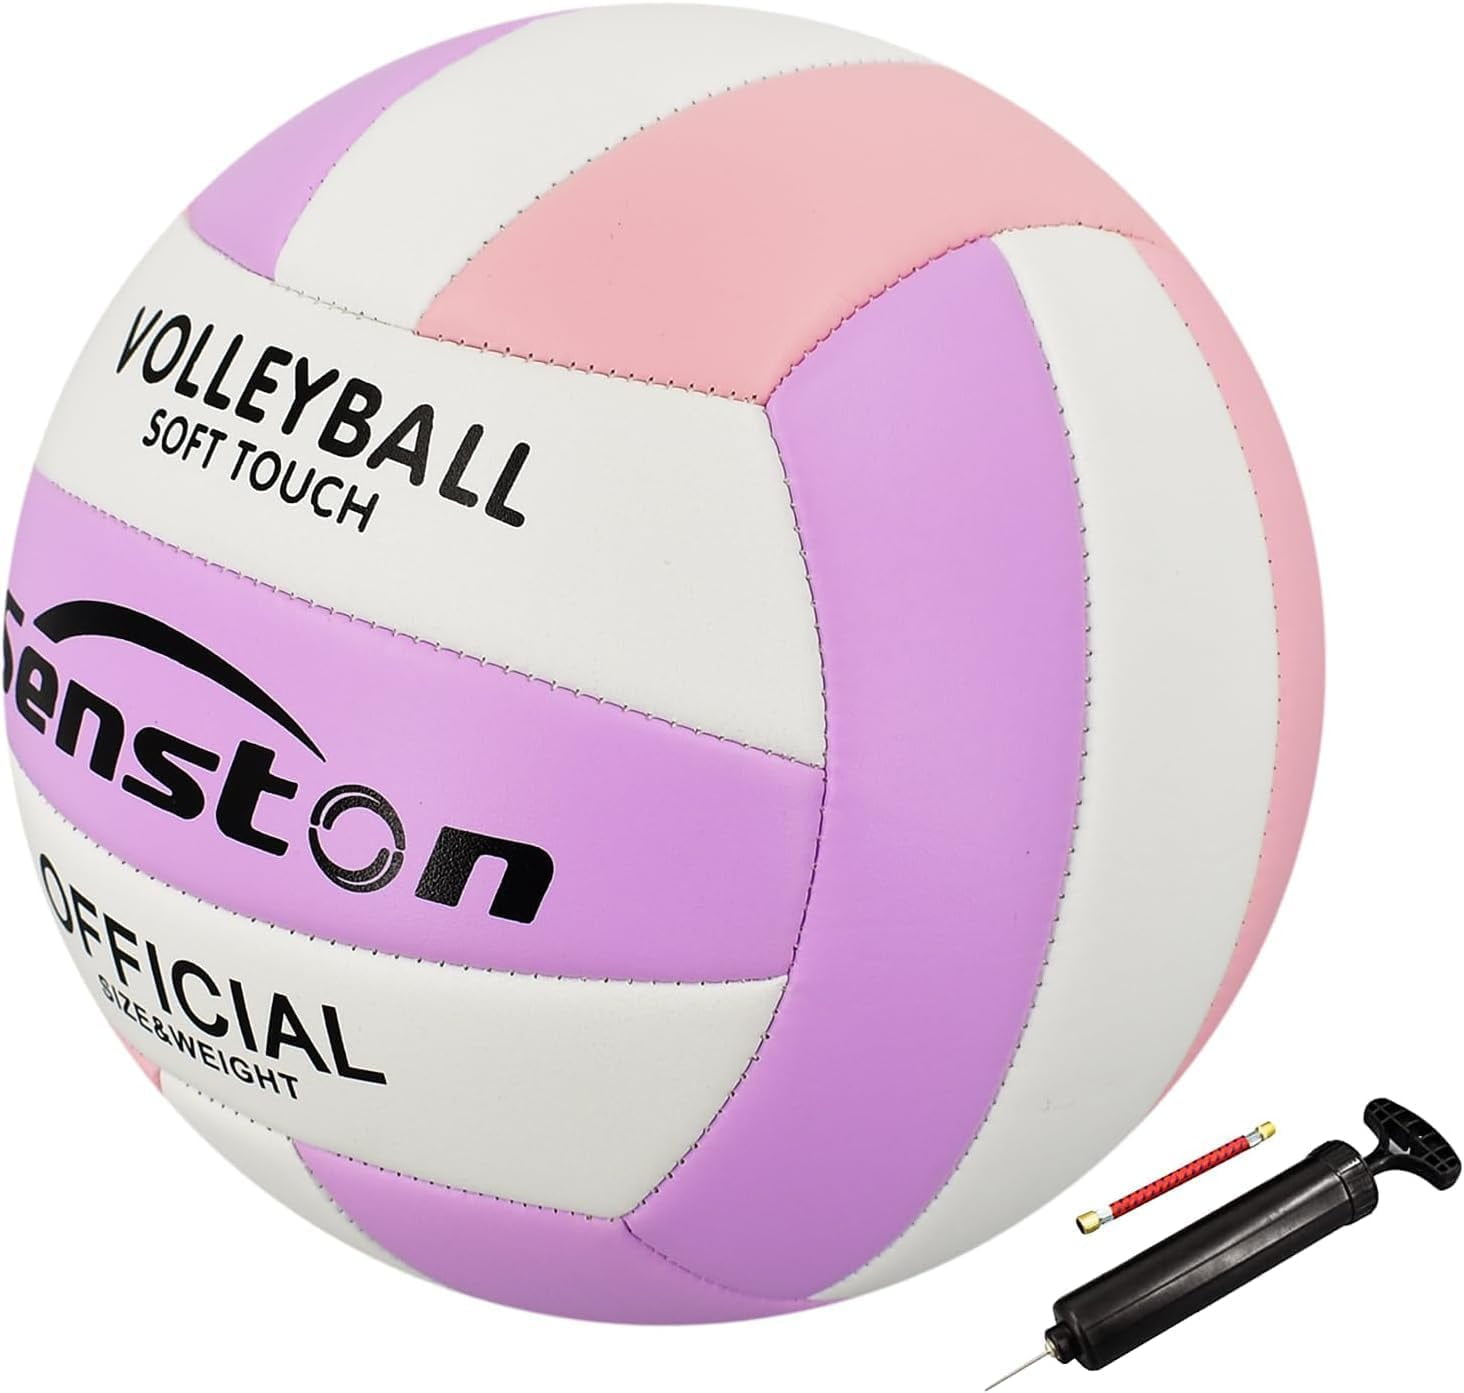 Senston Volleyball Official Size 5 Soft-waterproof Touche Beach ...